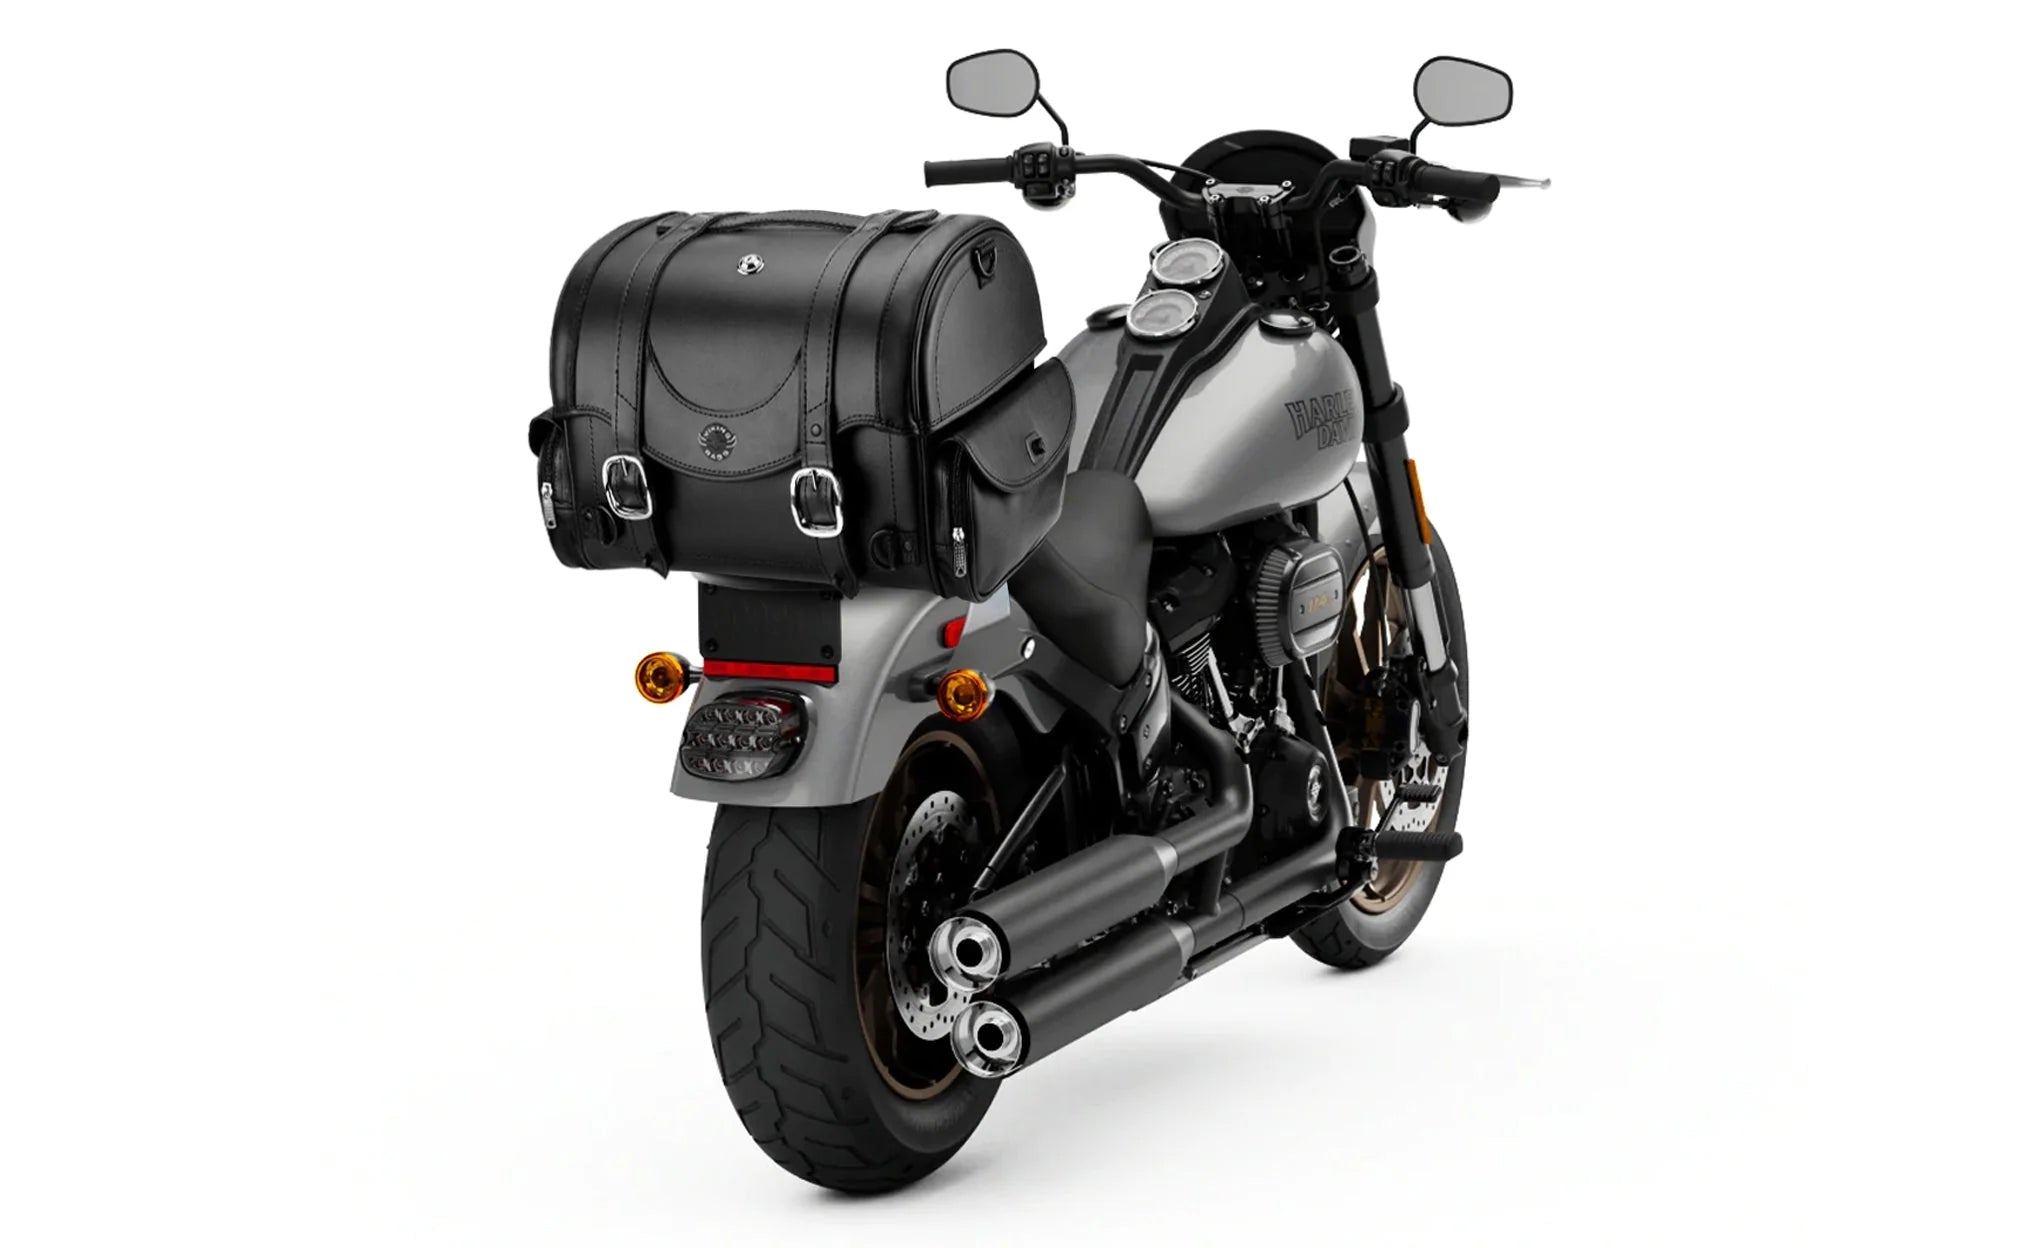 21L - Century Medium Indian Leather Motorcycle Sissy Bar Bag on Bike Photo @expand